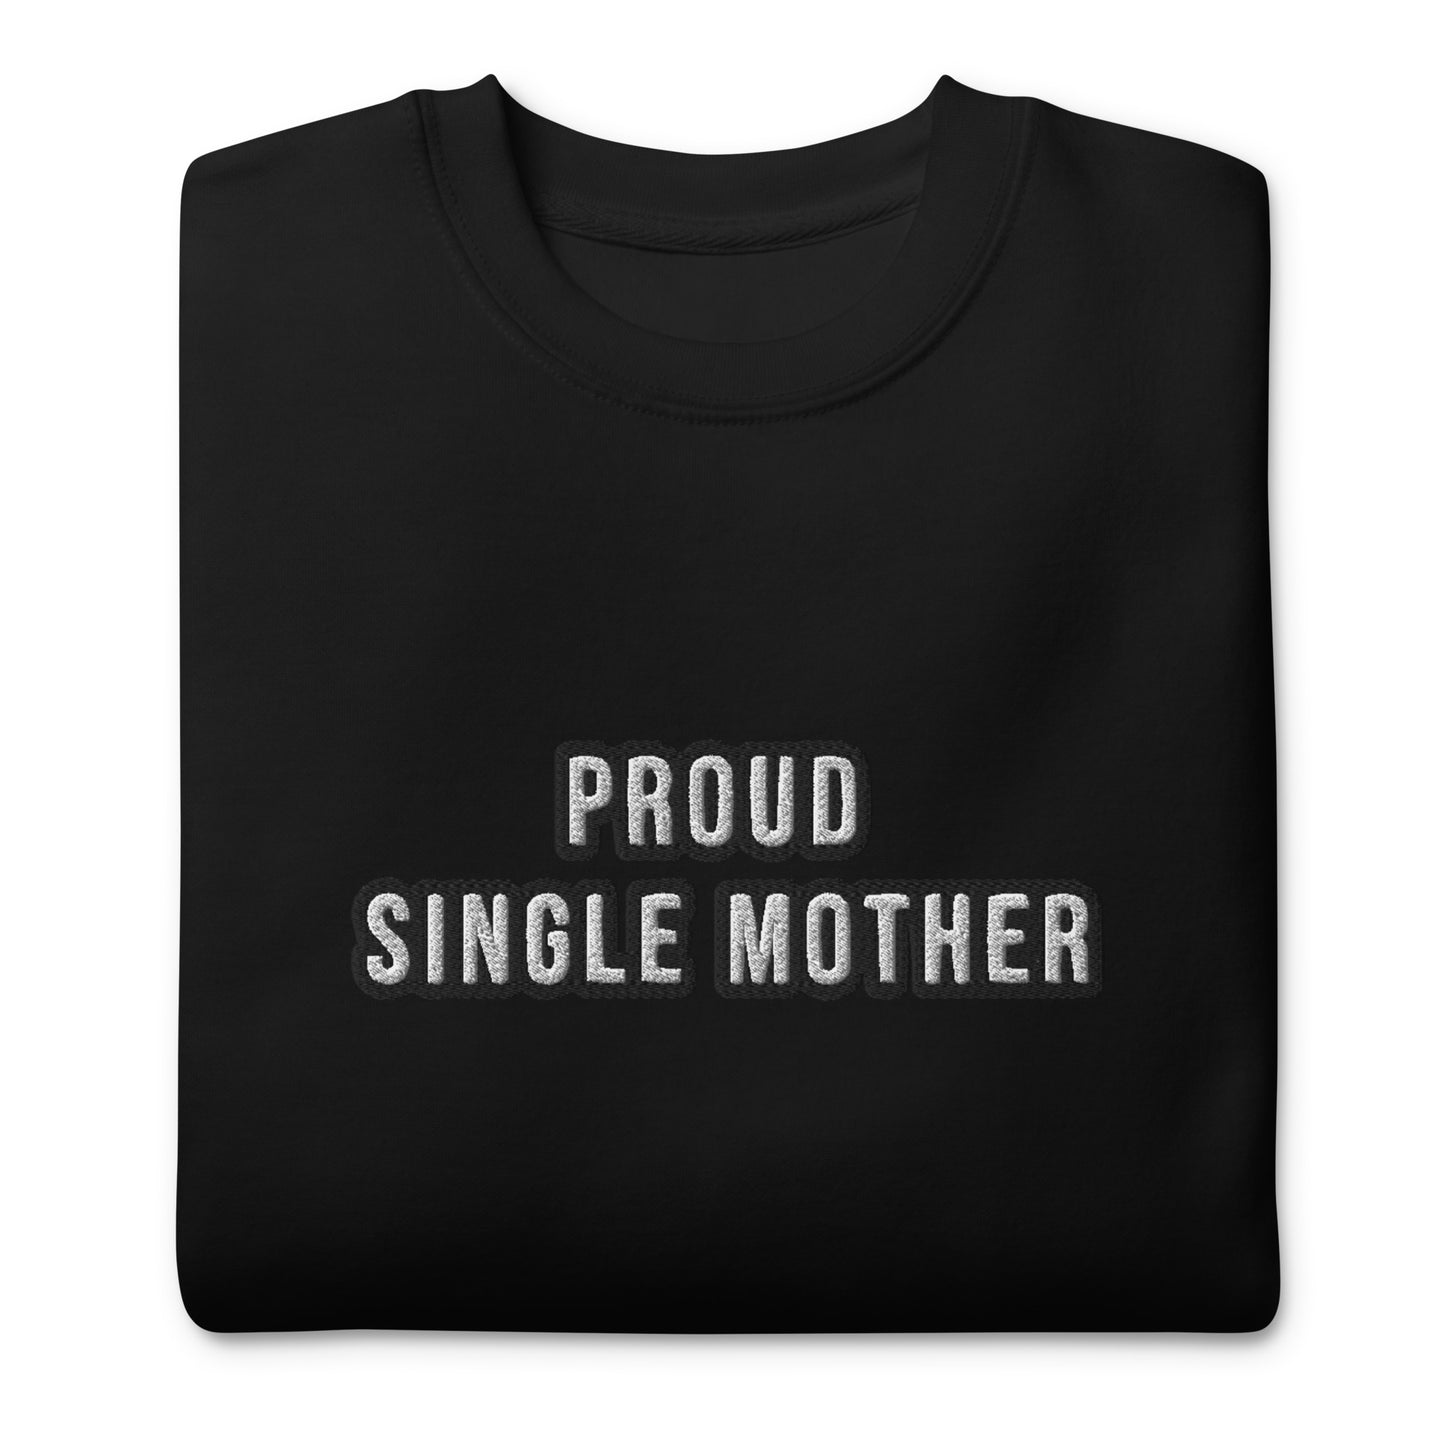 Proud Single Mother / Single Mother's Club Embroidered Unisex Sweatshirt